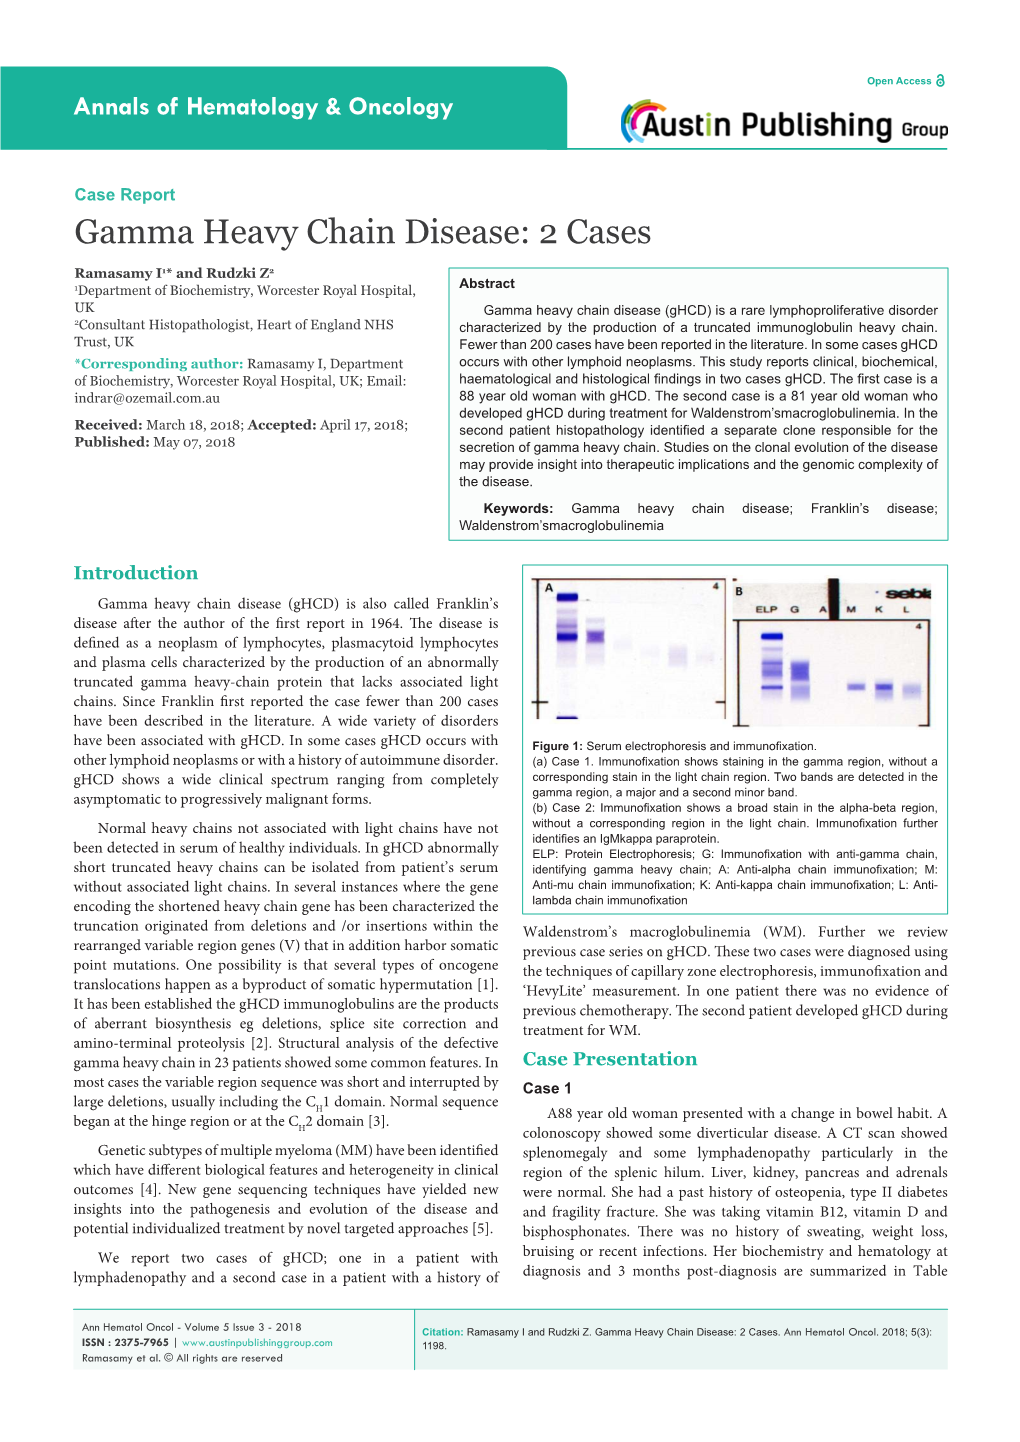 Gamma Heavy Chain Disease: 2 Cases